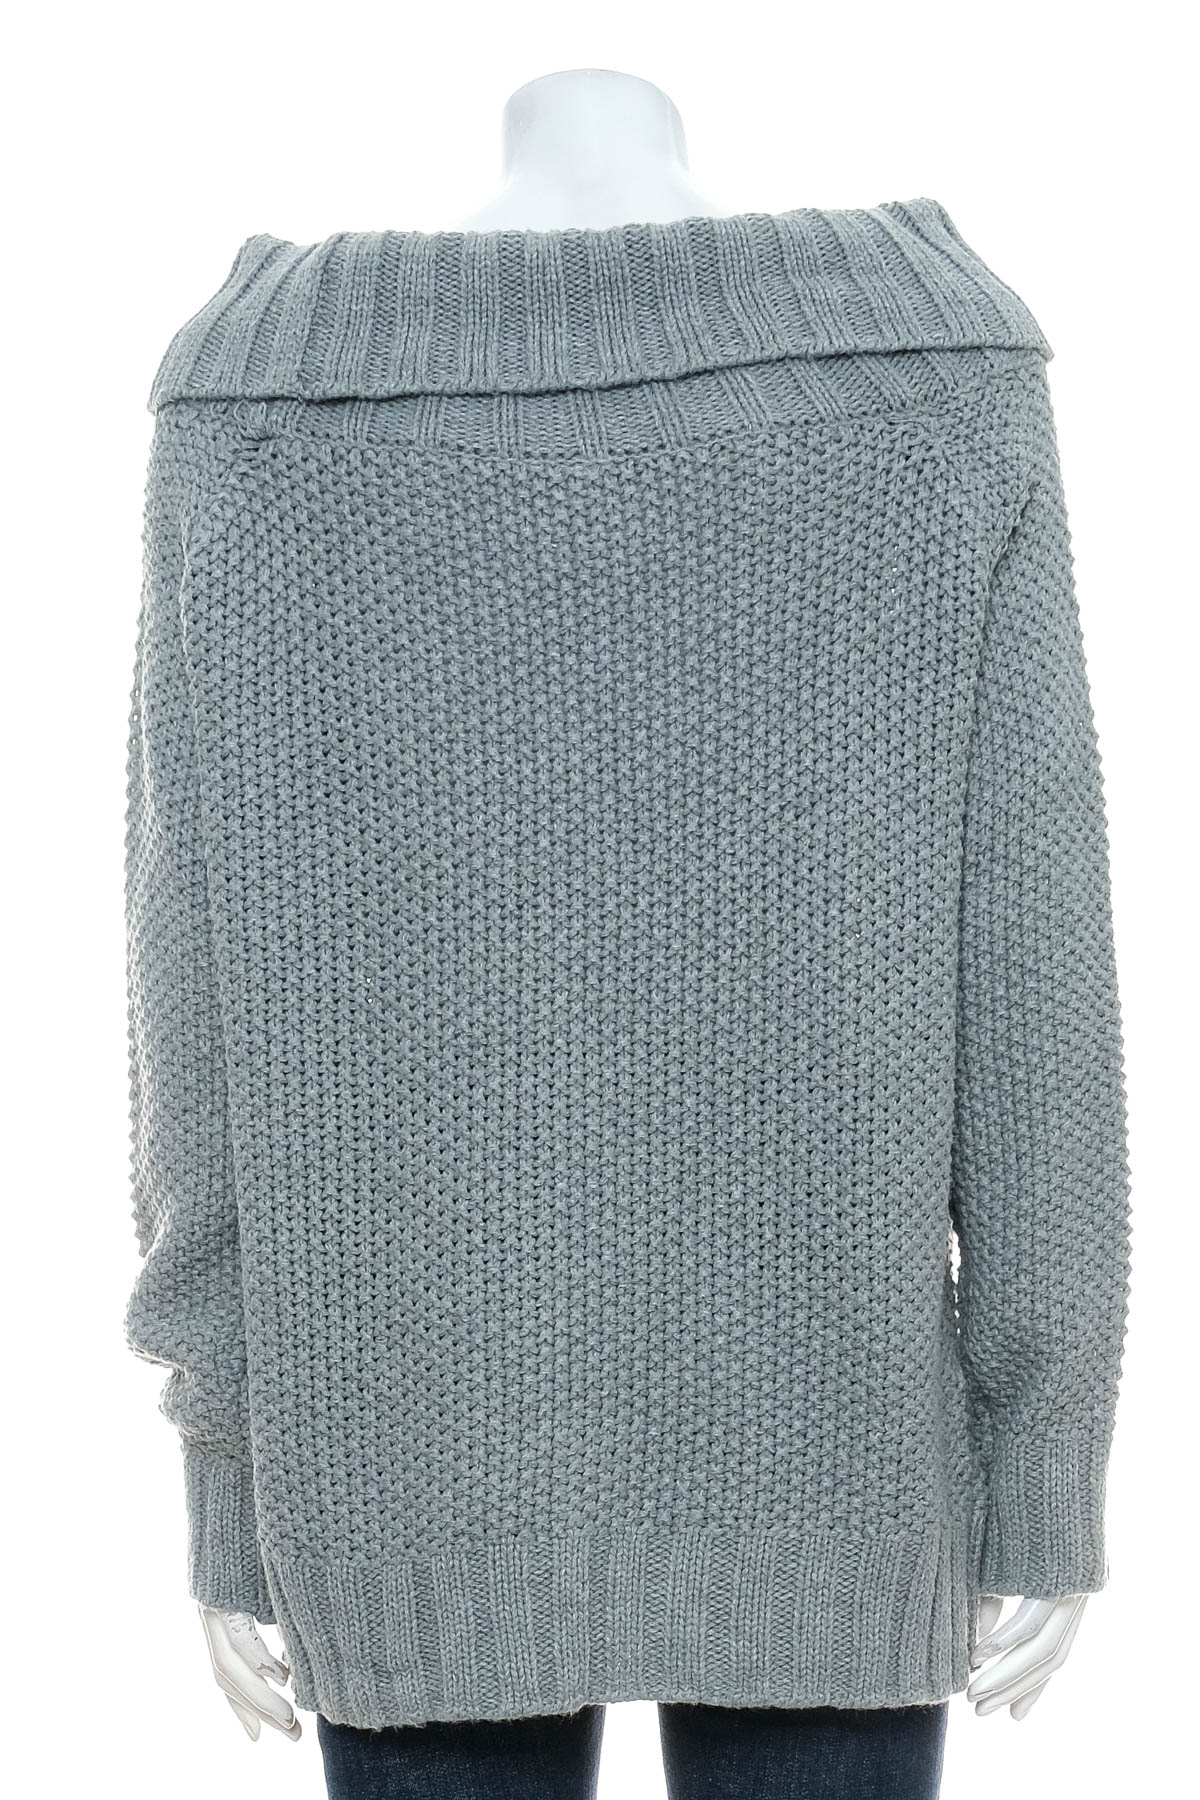 Women's sweater - Now - 1